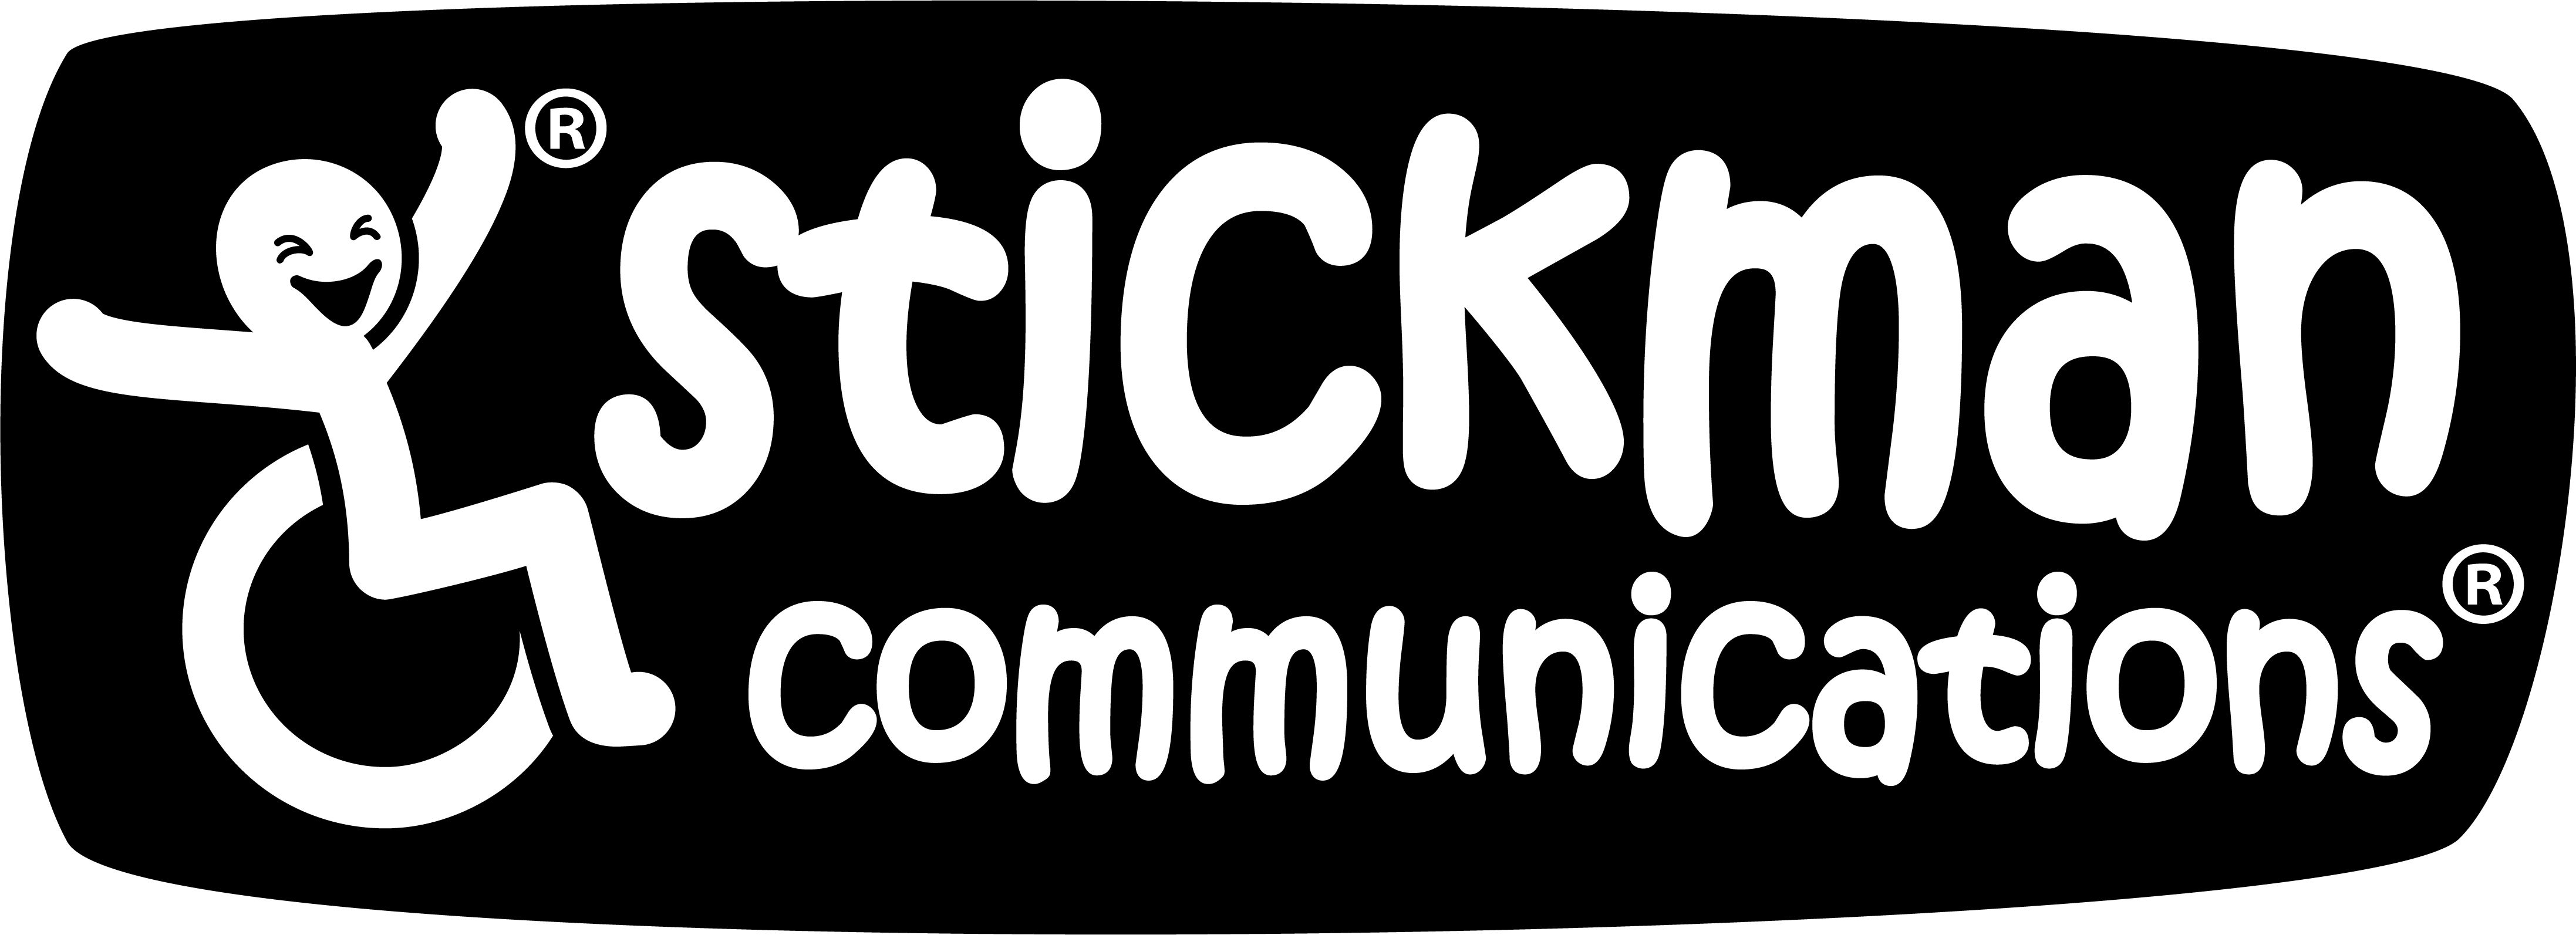 Stickman communications 